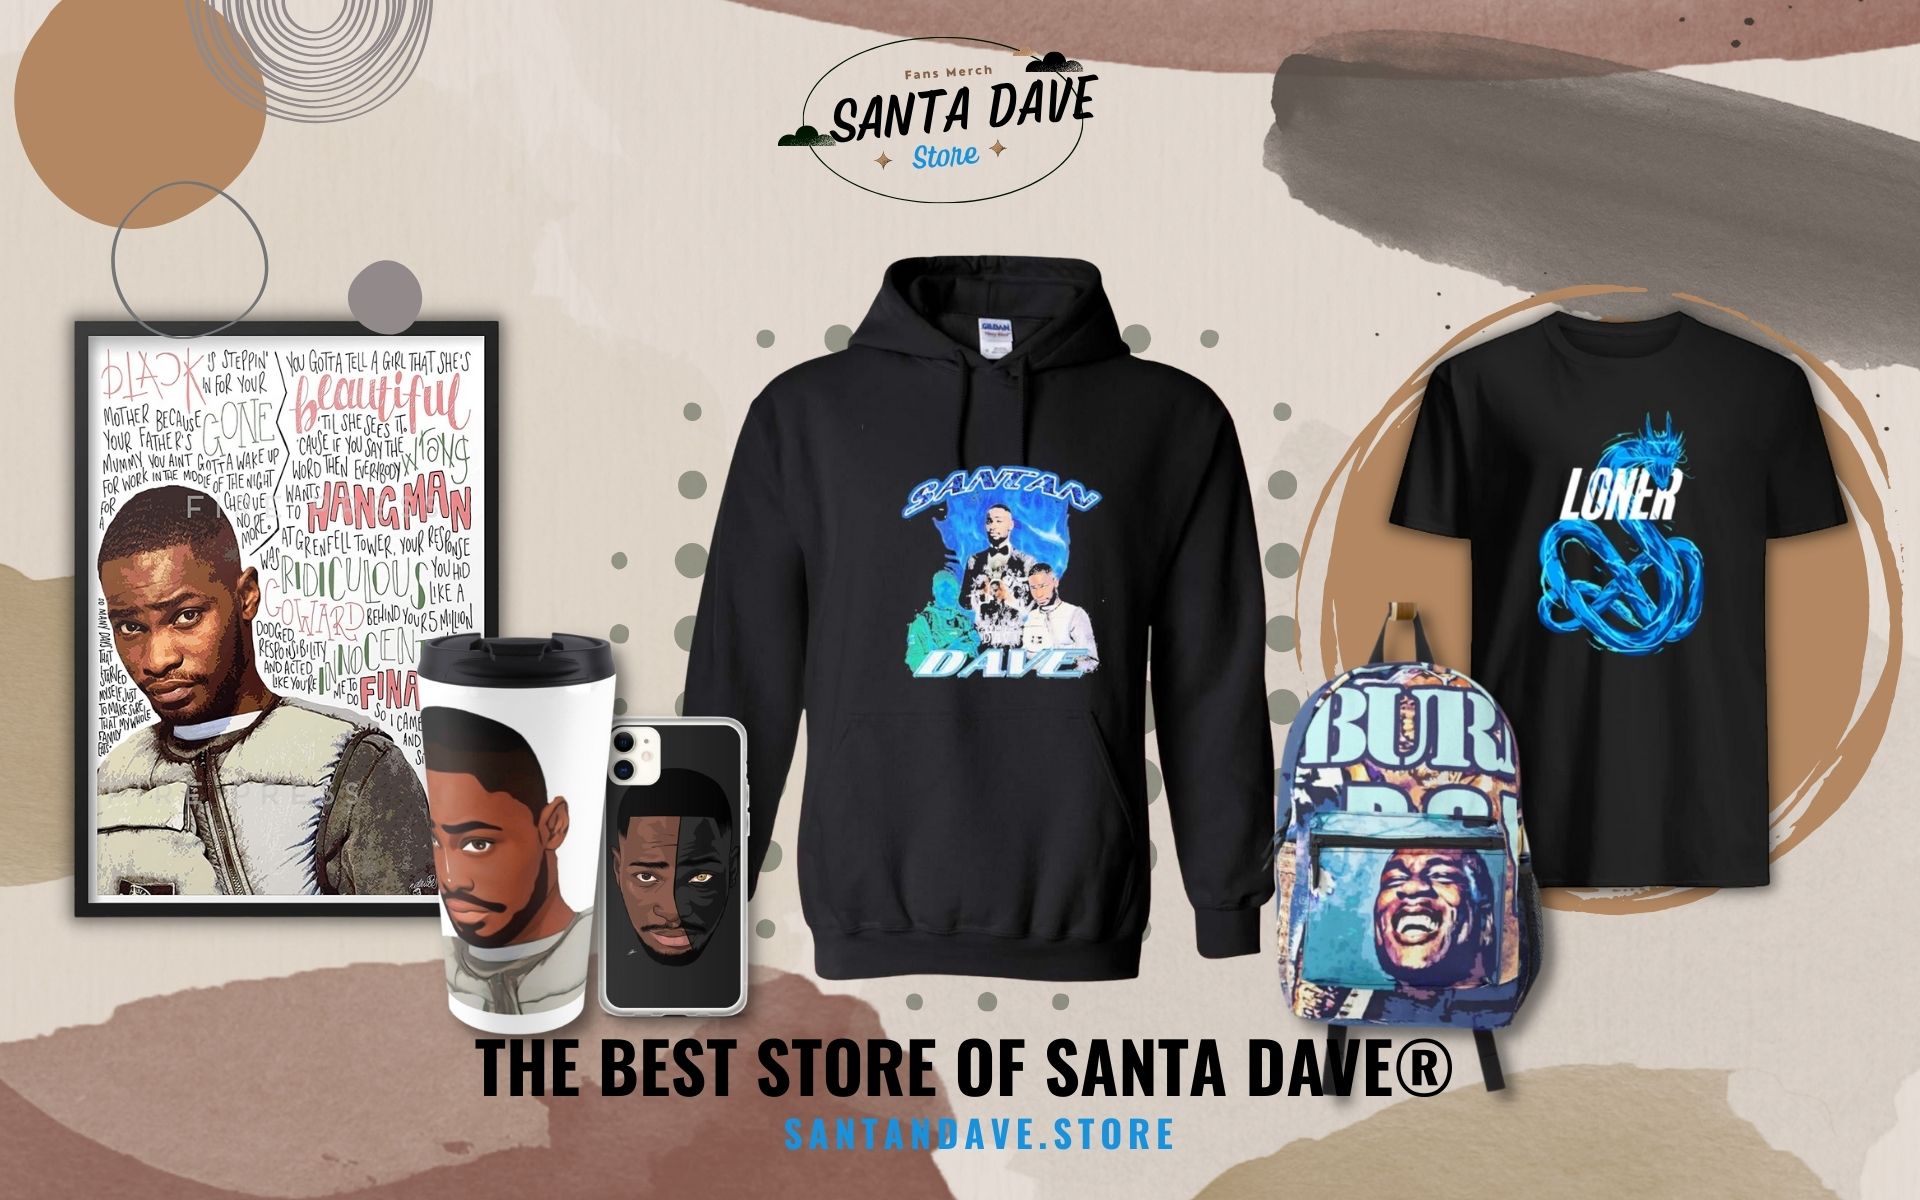 Santan Dave Store Web Banner - Santan Dave Store